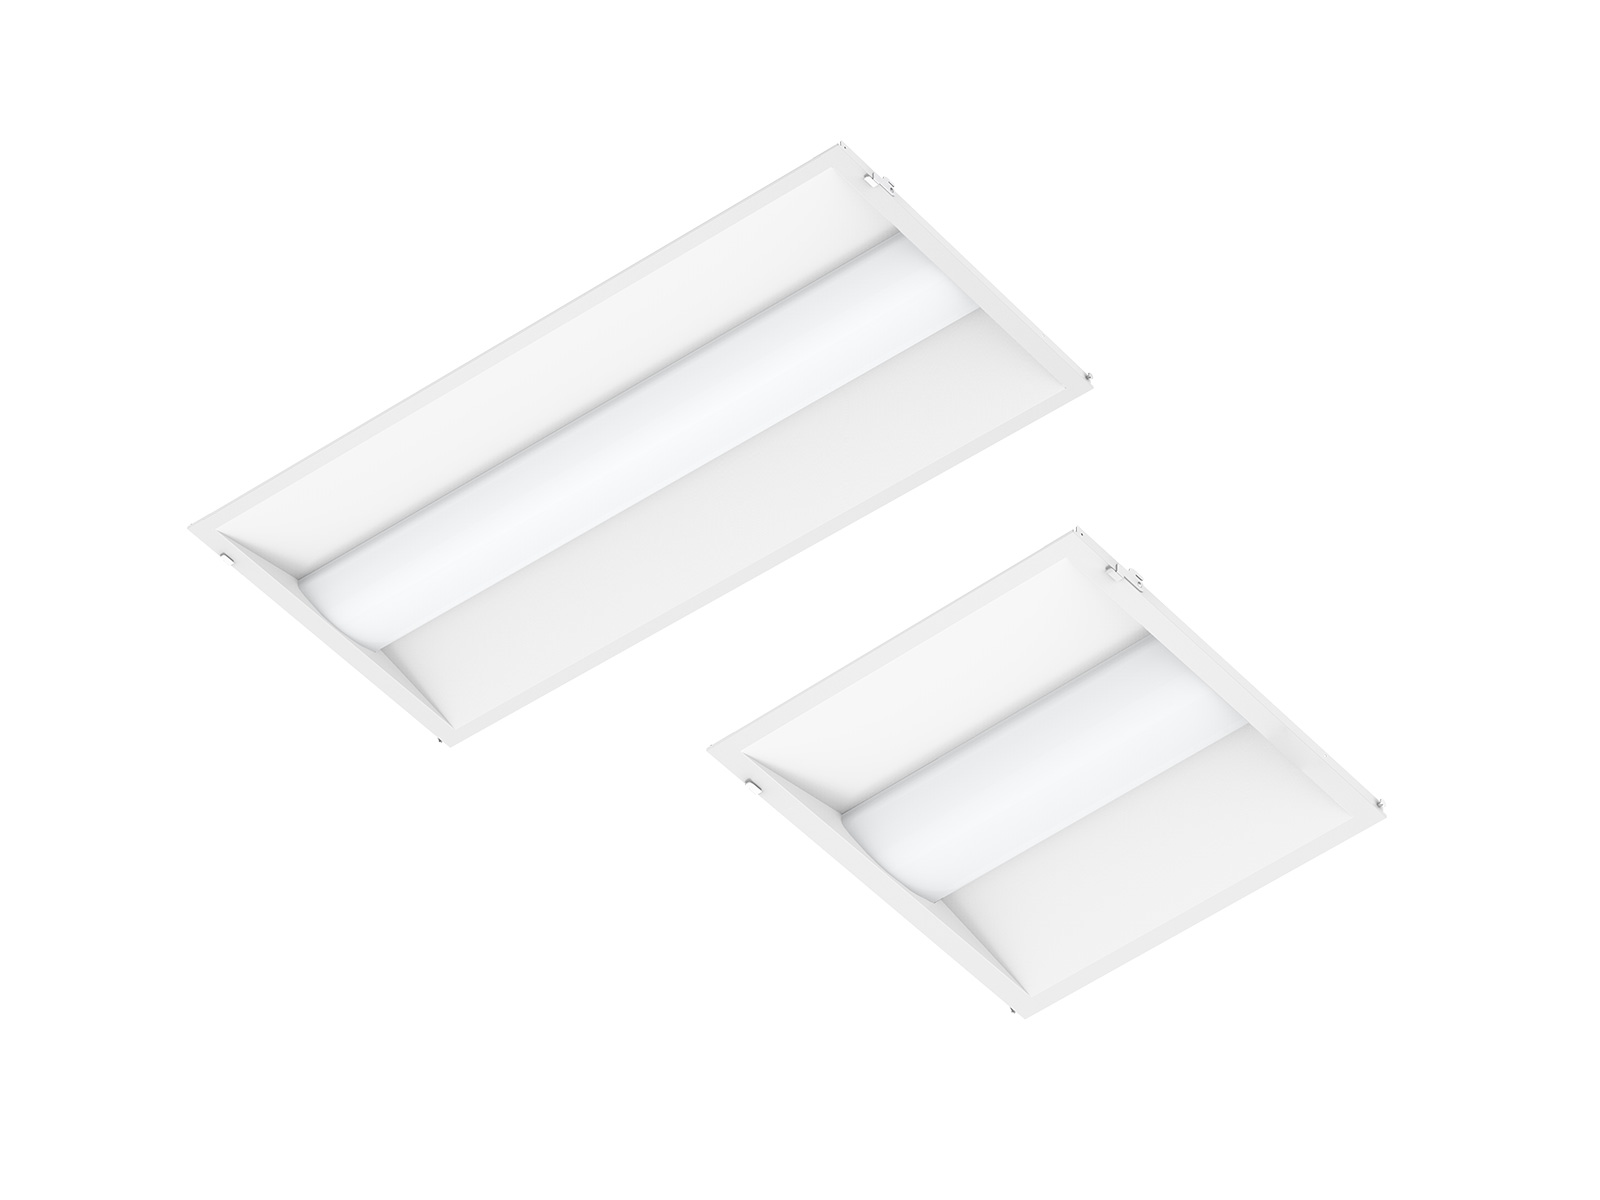 GK ZA 2x4 flexible led surface panel light